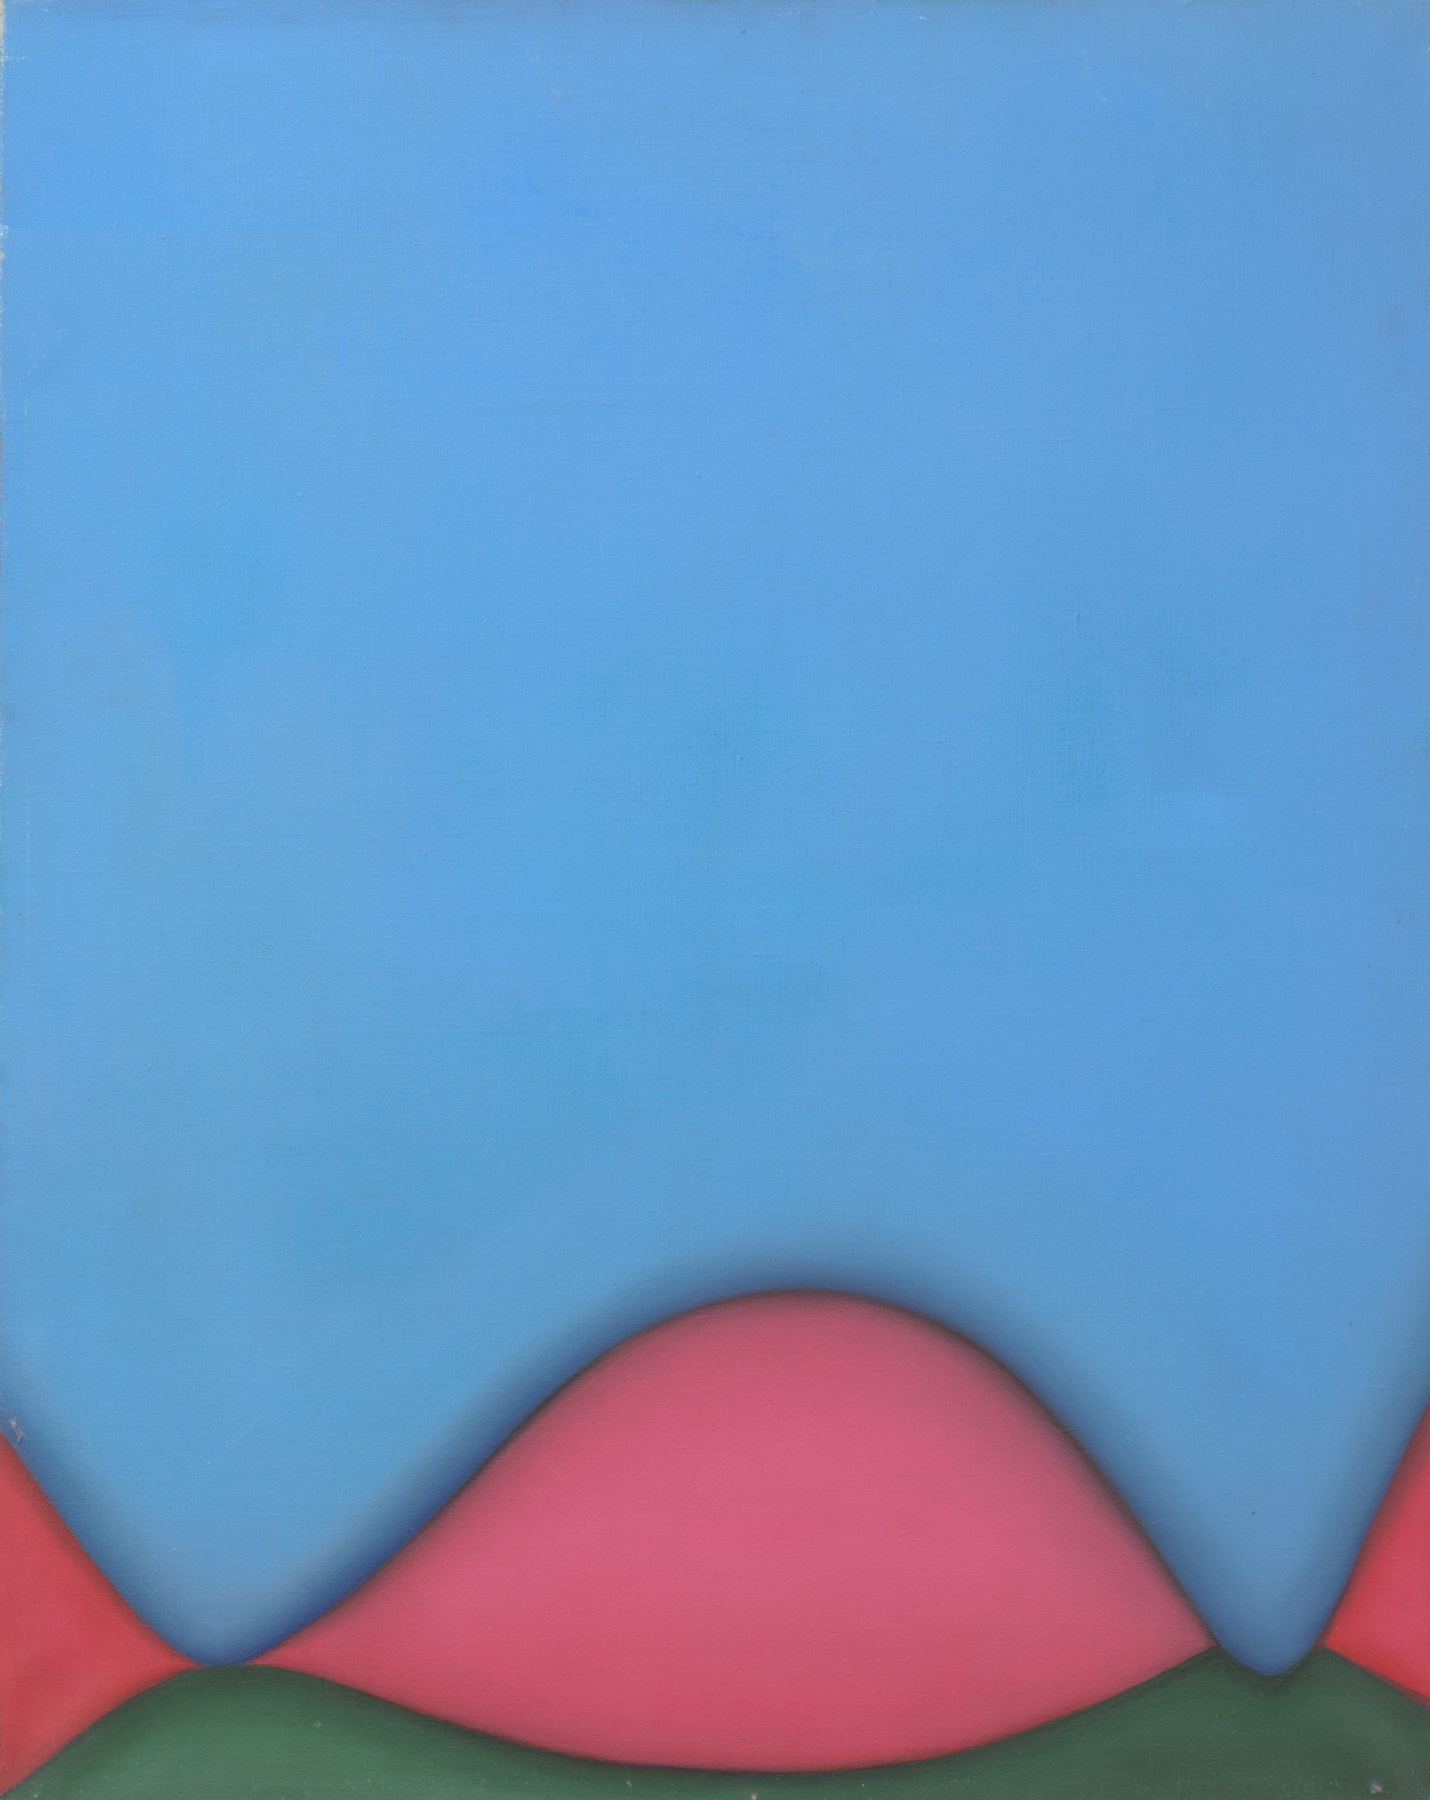 Huguette Caland
Corps bleu (Bribes de corps), 1973
Oil on linen
36 3/16 x 28 7/8 inches
92 x 73.2 centimeters